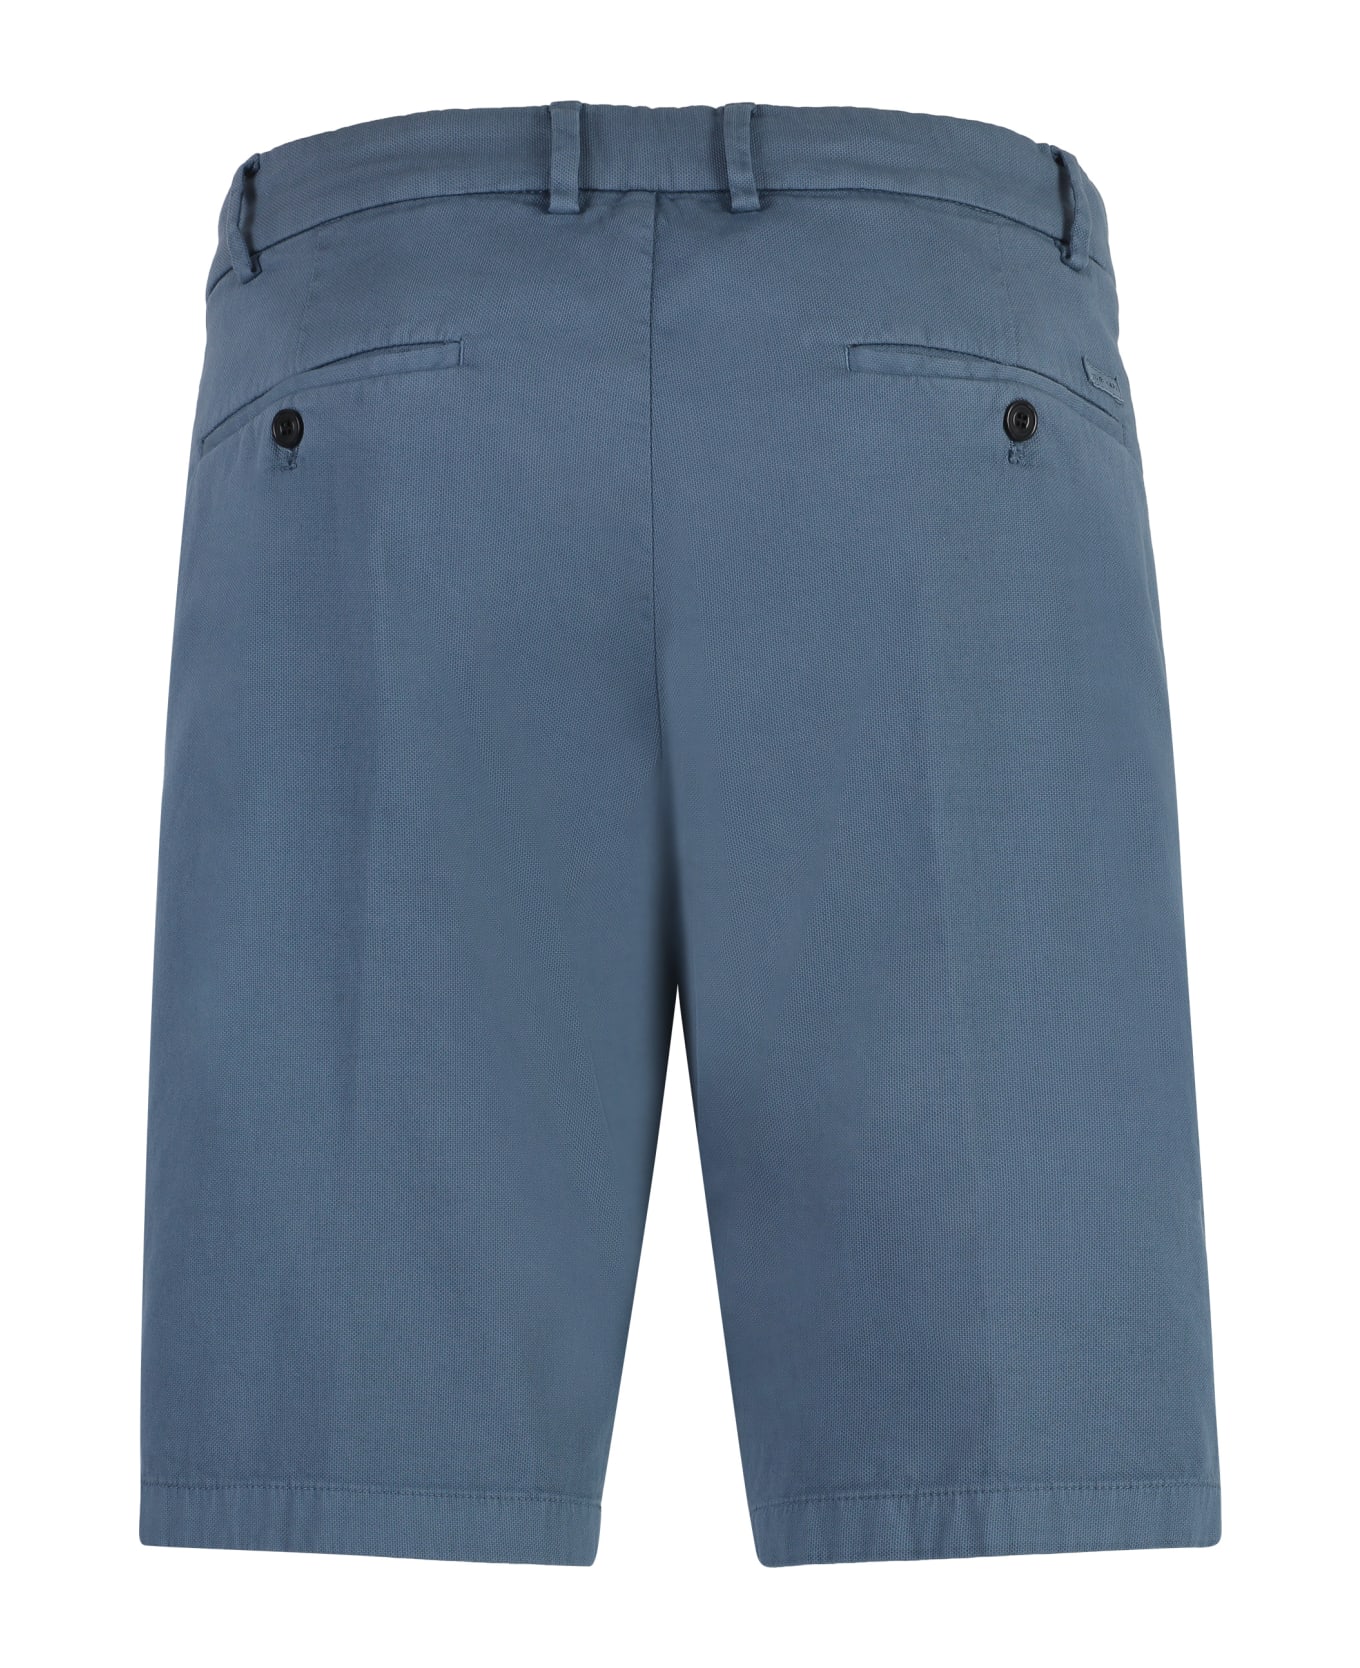 Paul&Shark Cotton Bermuda Shorts - Light Blue ショートパンツ